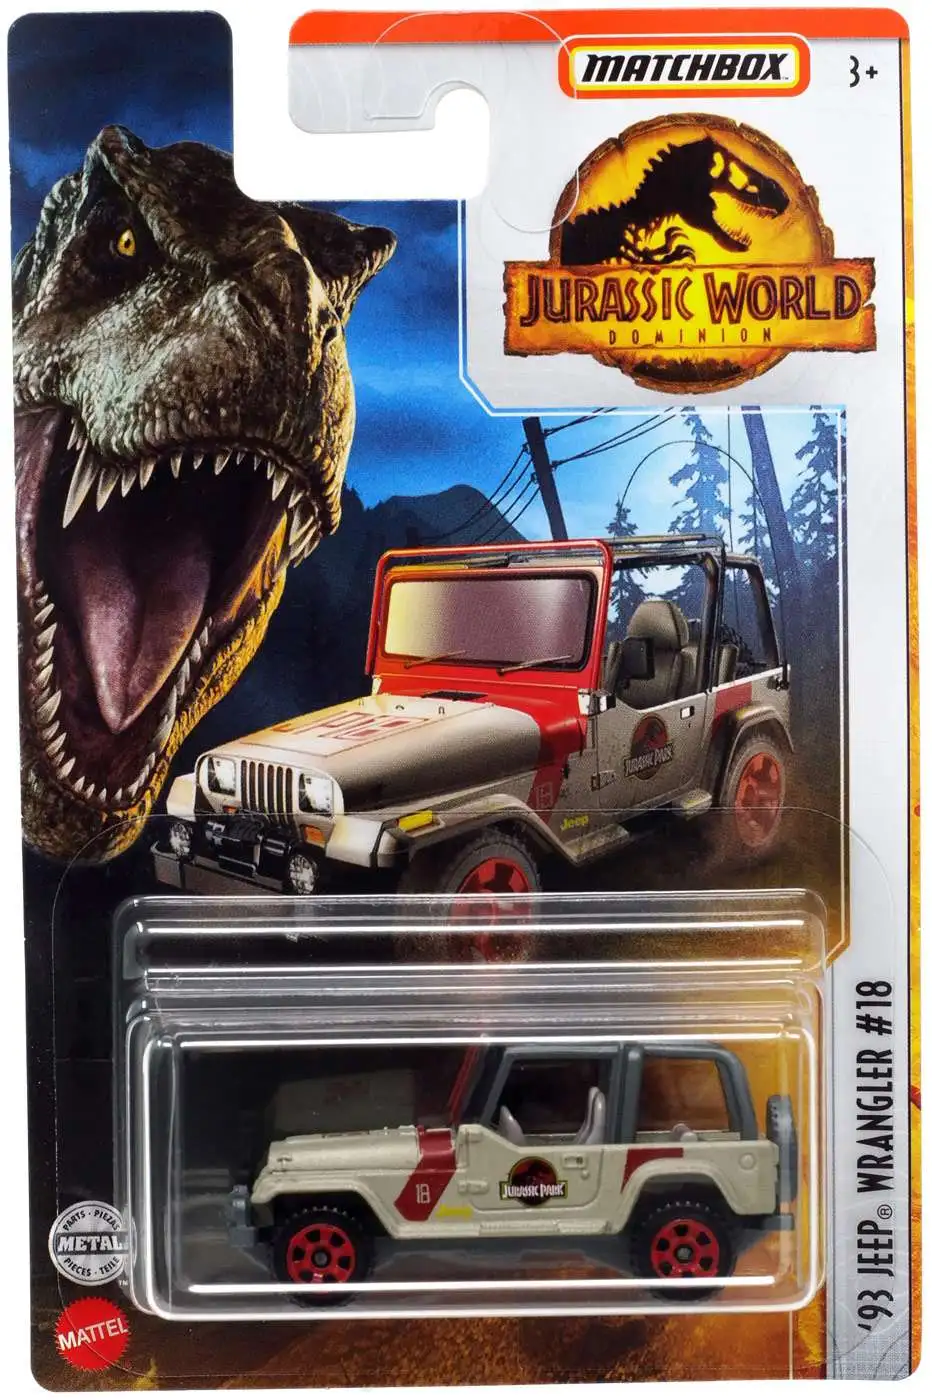 Jurassic World Dominion Matchbox 93 Jeep Wrangler 18 164 Diecast Car Mattel  - ToyWiz